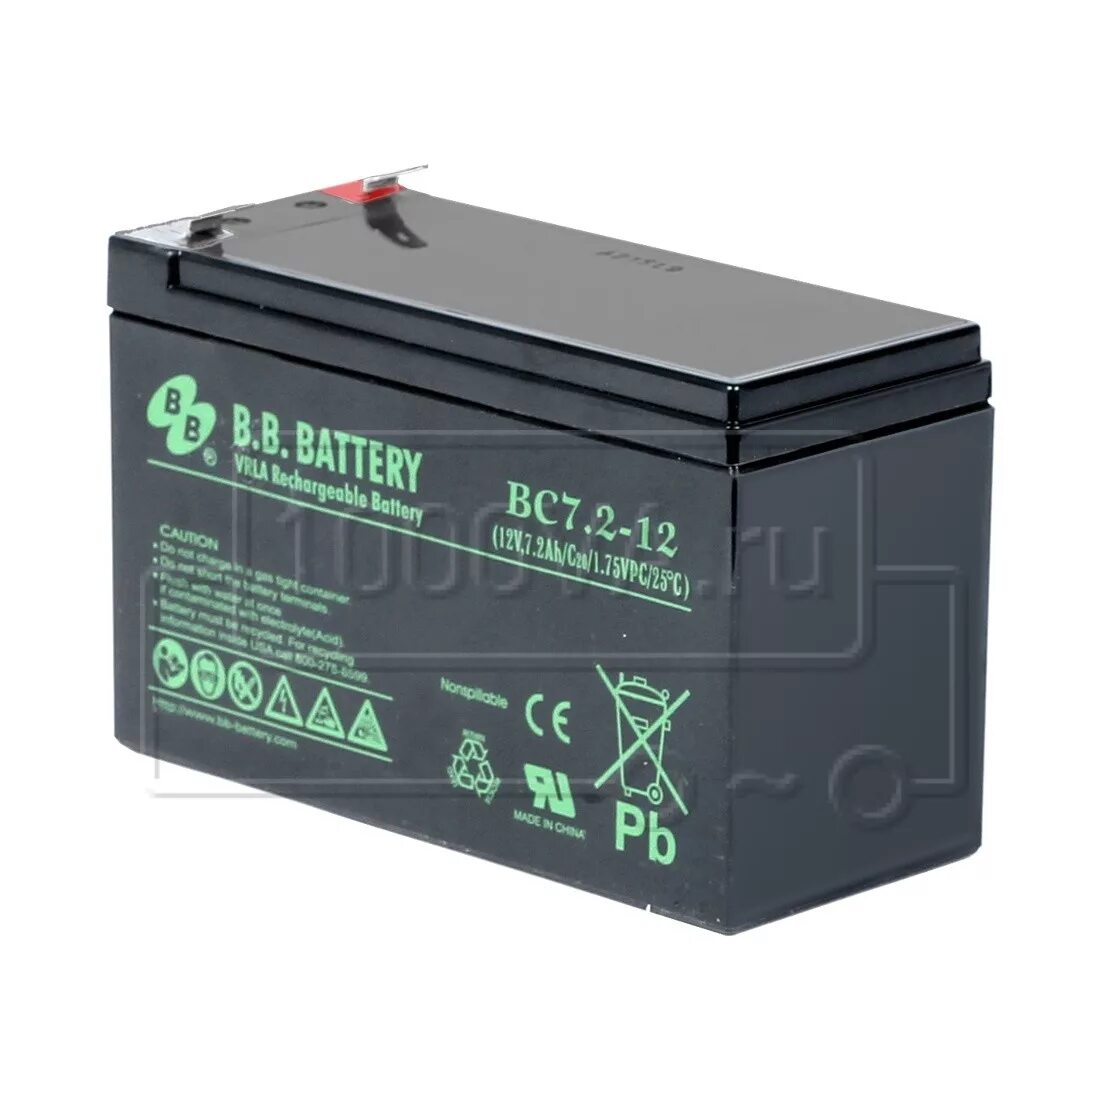 Аккумулятор BB Battery BC 7.2-12. Батарея BB Battery 12в. Аккумулятор vim АКБ 12 - 40. B.B. Battery BC7.2-12 12в 7.2 а·ч b.b. Battery.